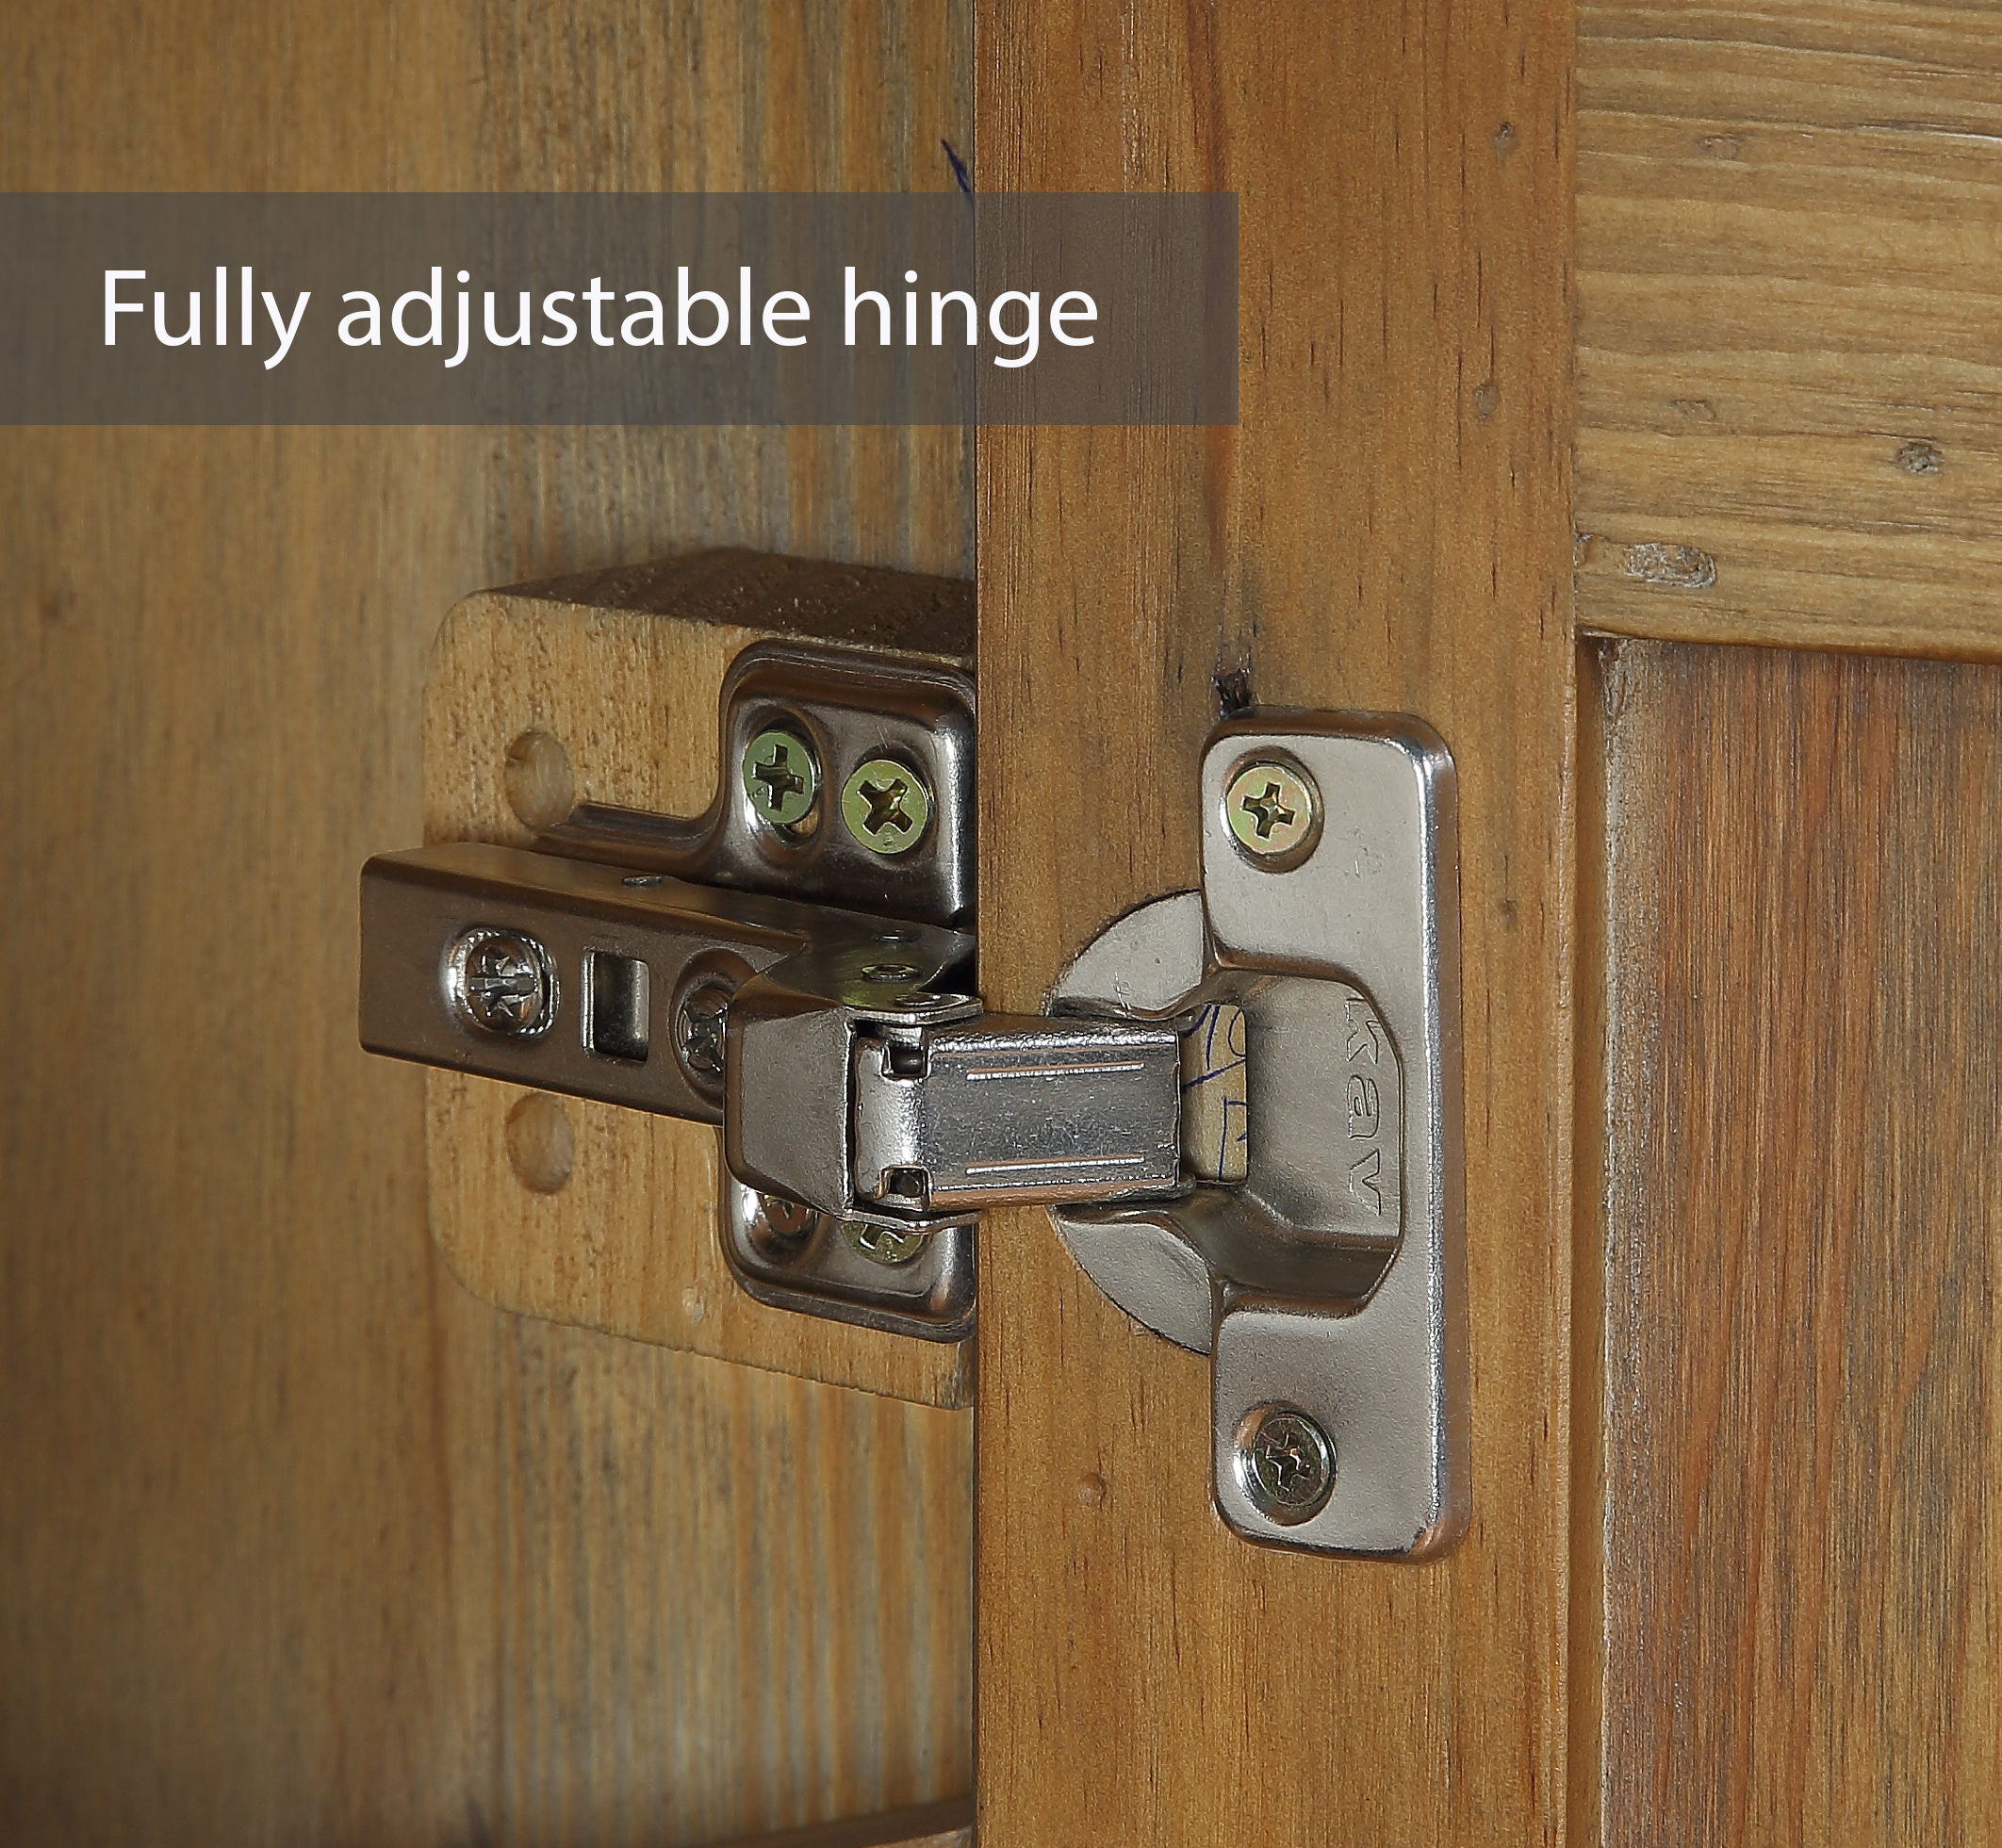 a fully adjustable door hinge